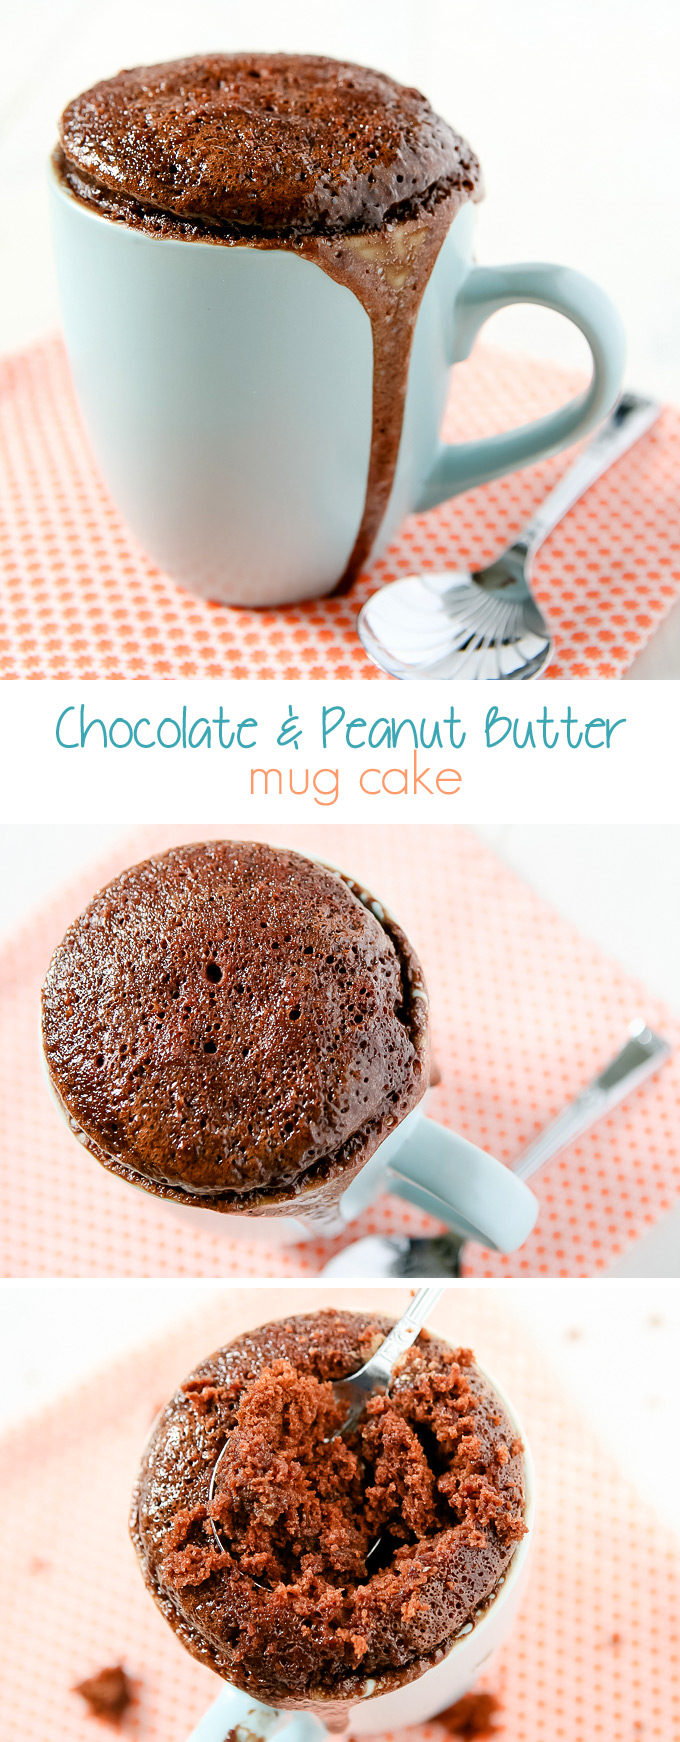 Chocolate Peanut Butter Mug Cake Recipe by Sweet2EatBaking.com